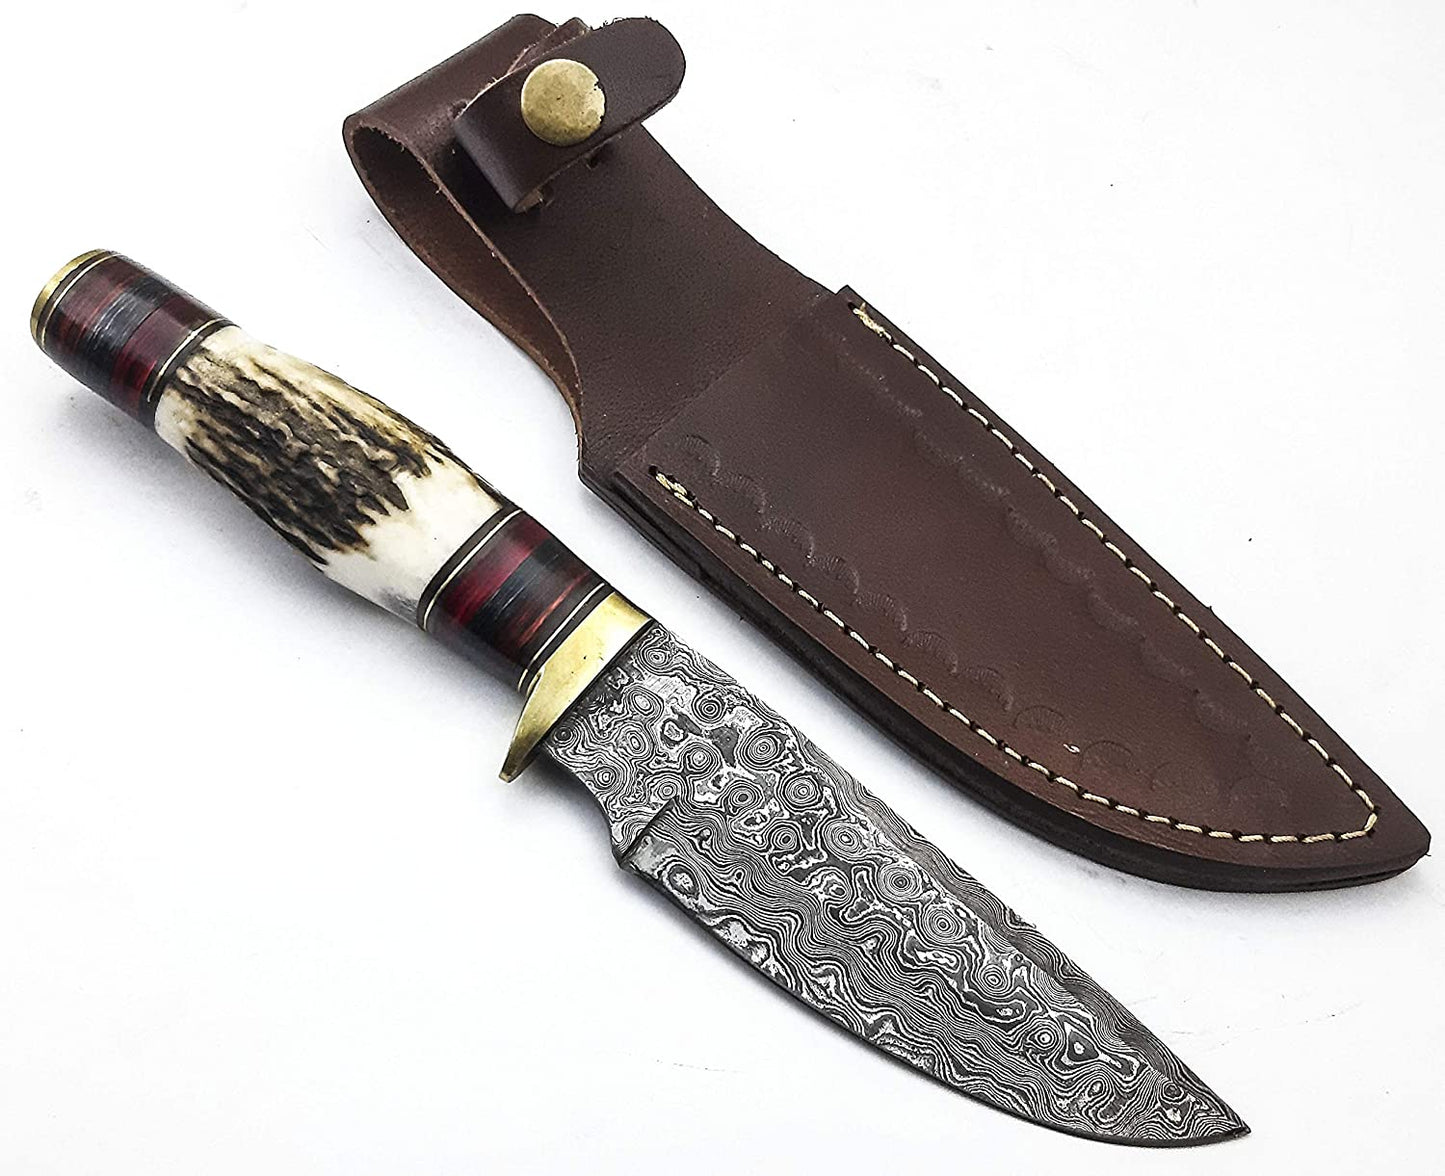 Shard Damascus Steel Knife Handmade Hunting Knife RAIN Drop Pattern 10" Knife STAG/Antler Handle with Sheath